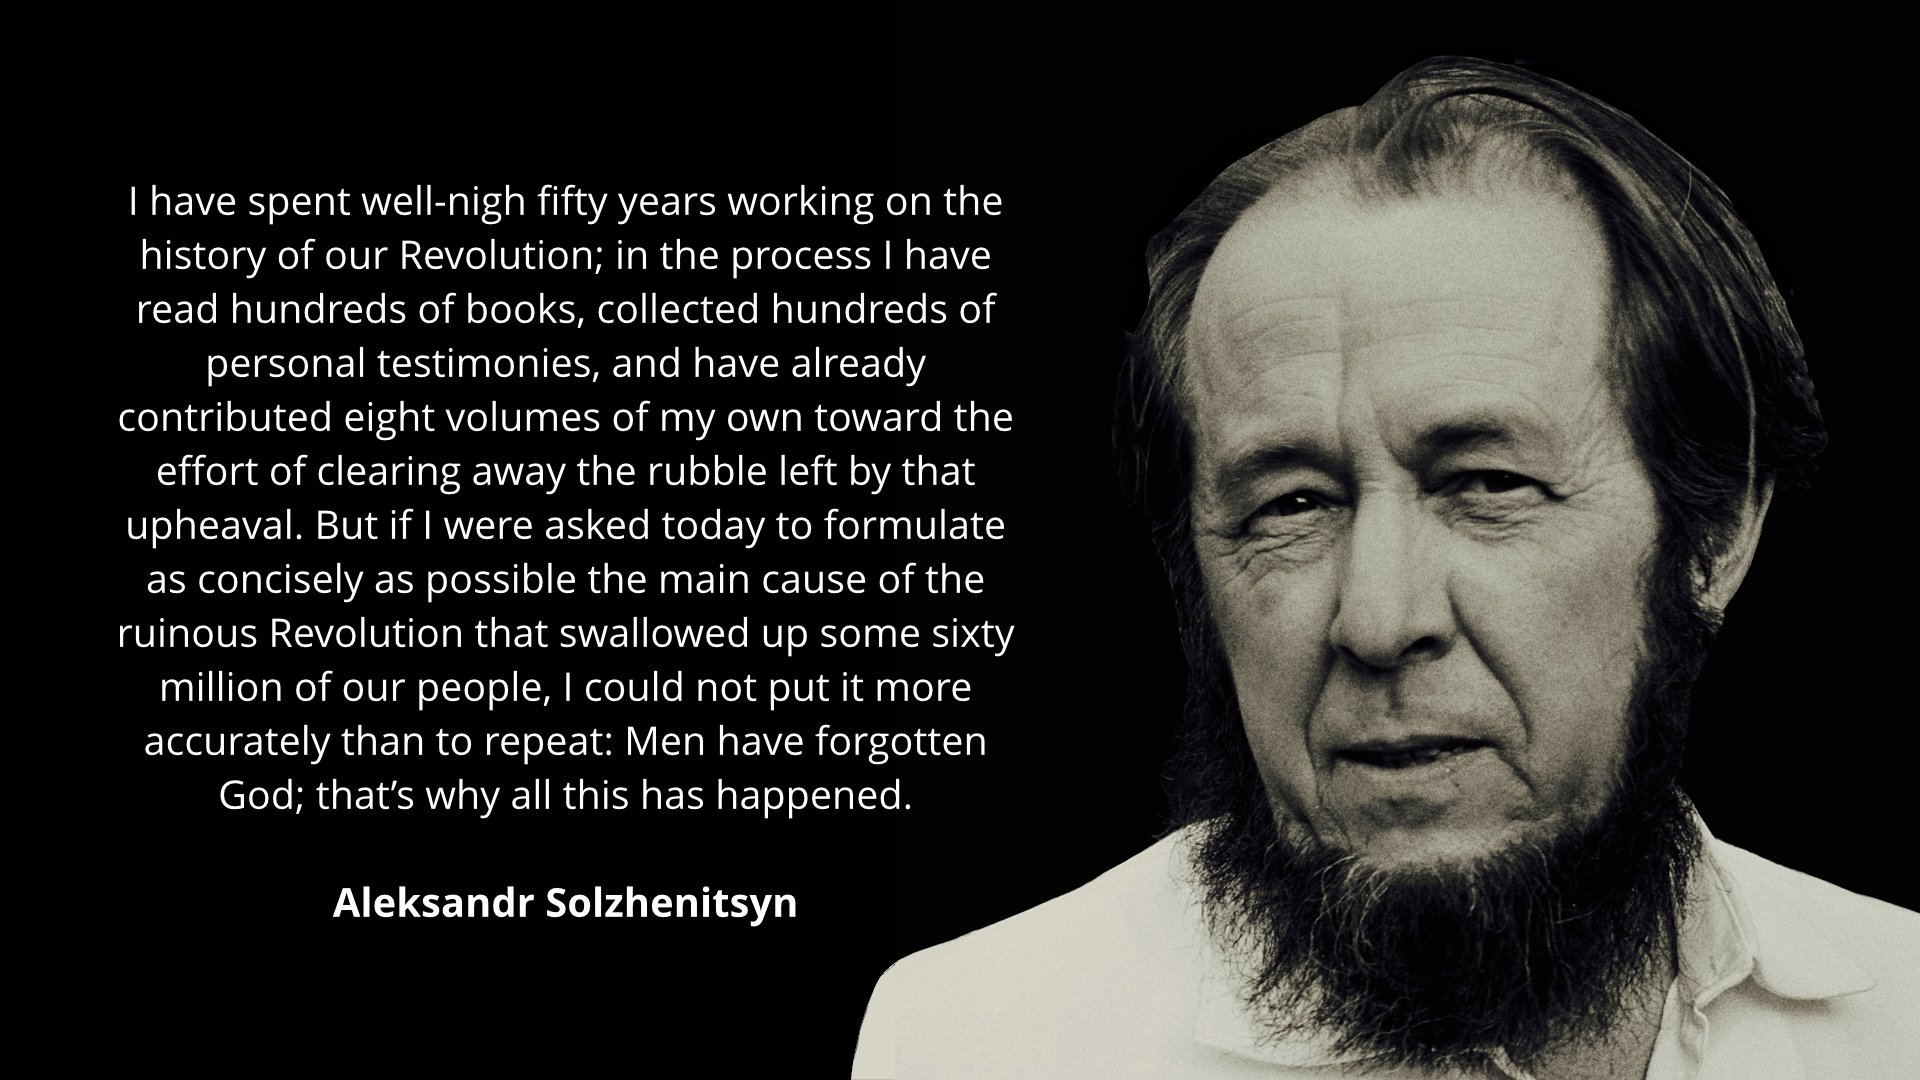 Solzhenitsyn: men have forgotten God